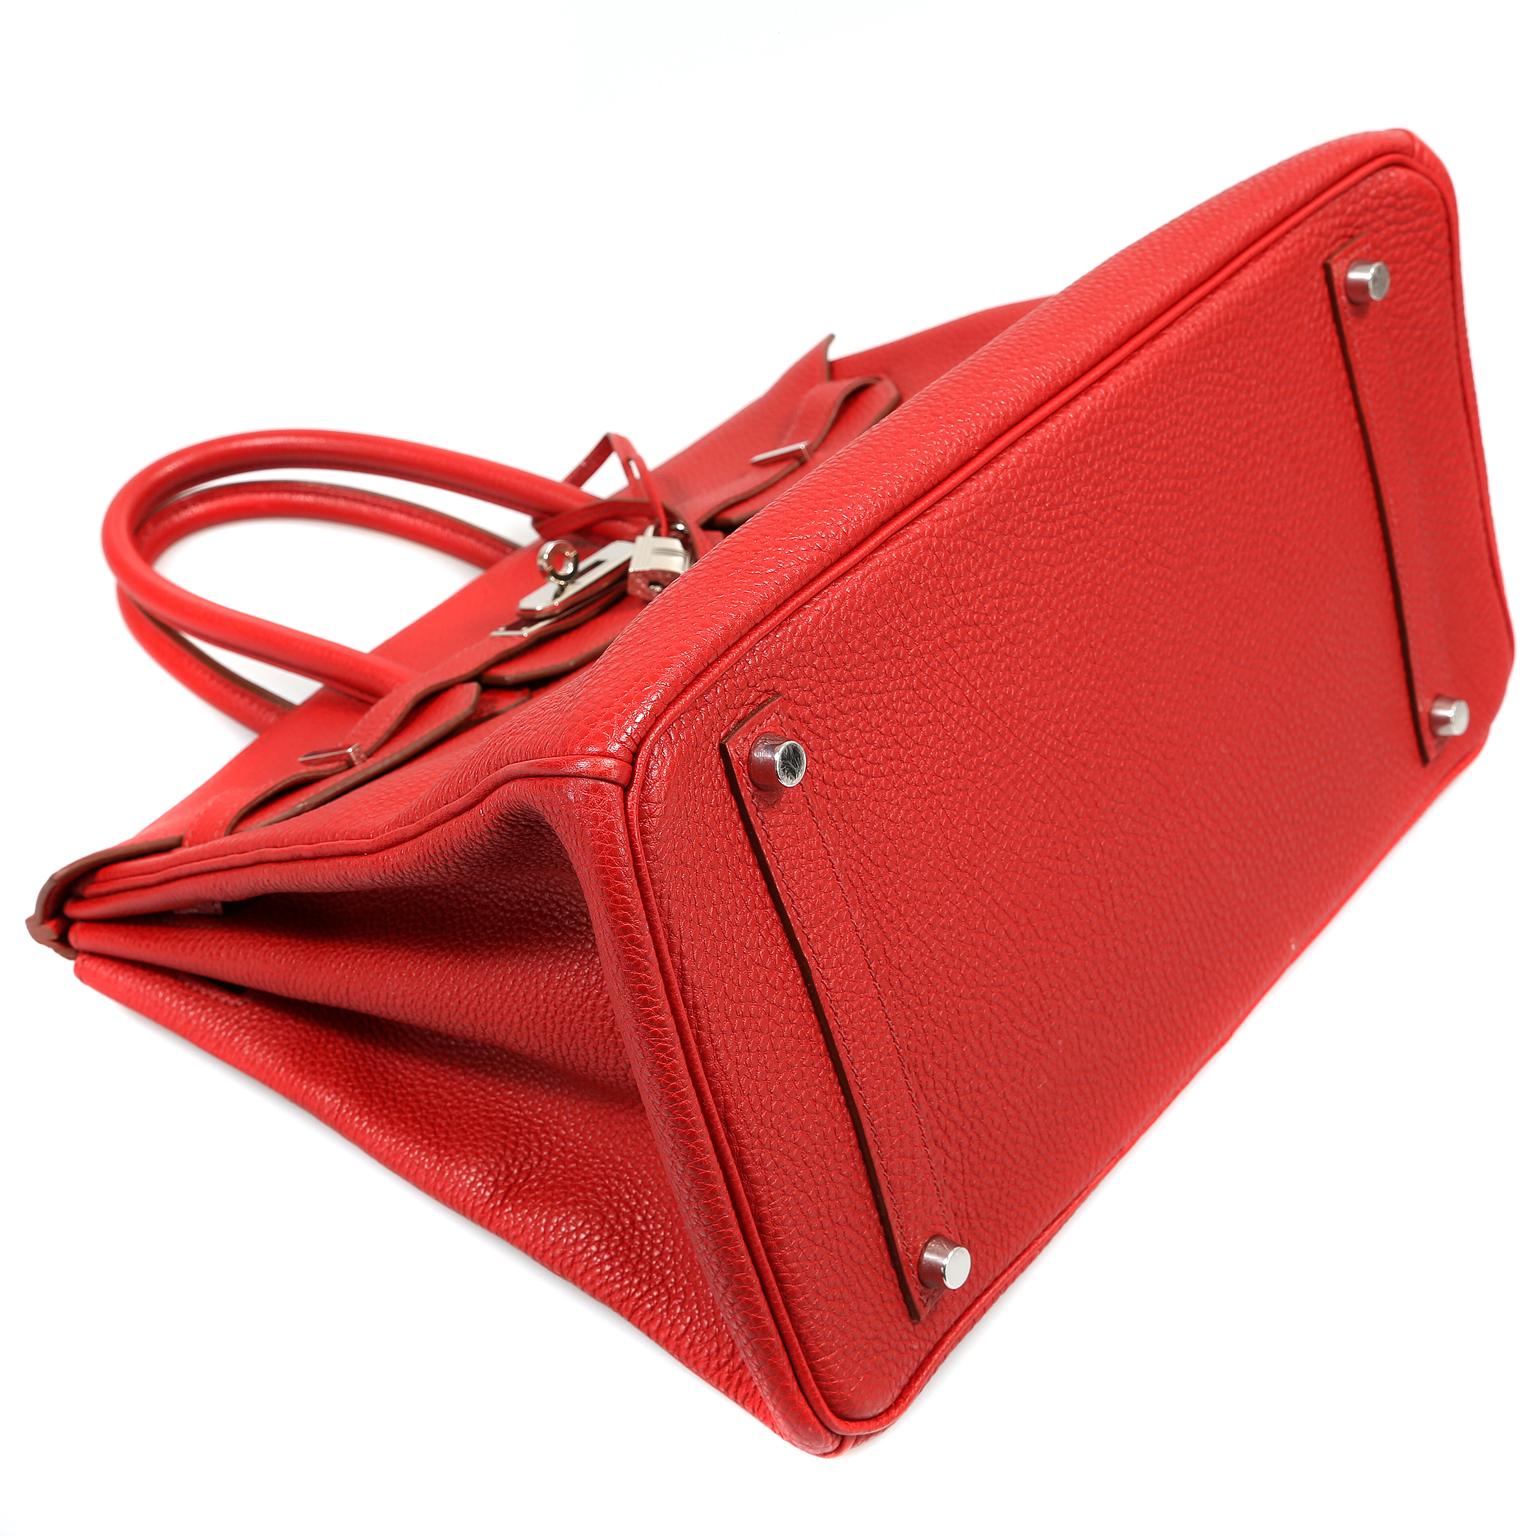 Hermès Red Togo 35 cm Birkin Bag 2